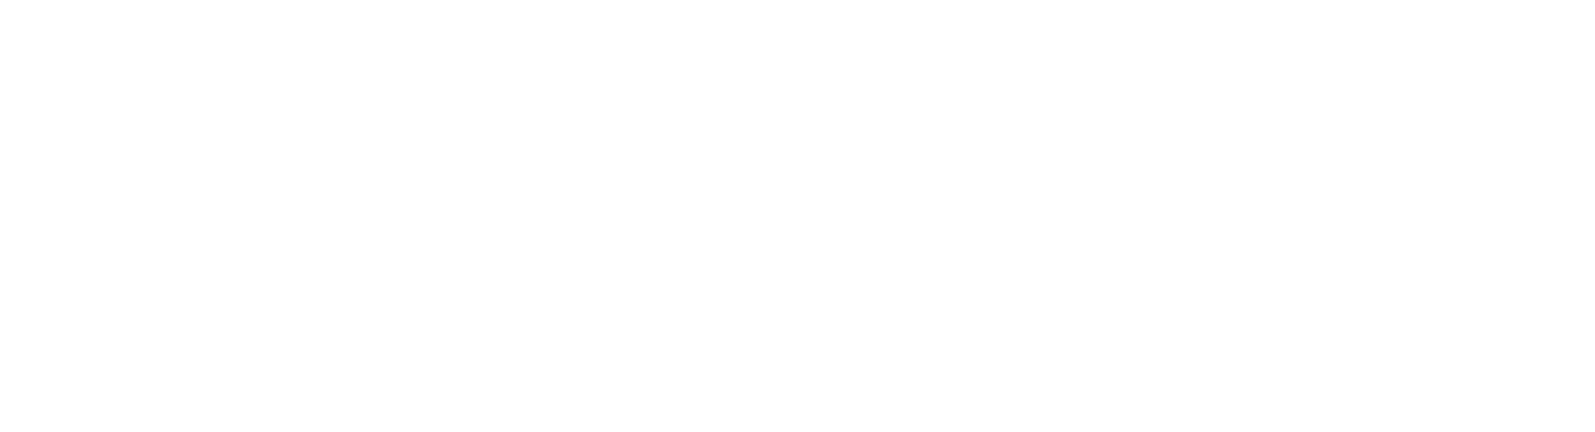 Jardine Cycle & Carriage Logo groß für dunkle Hintergründe (transparentes PNG)